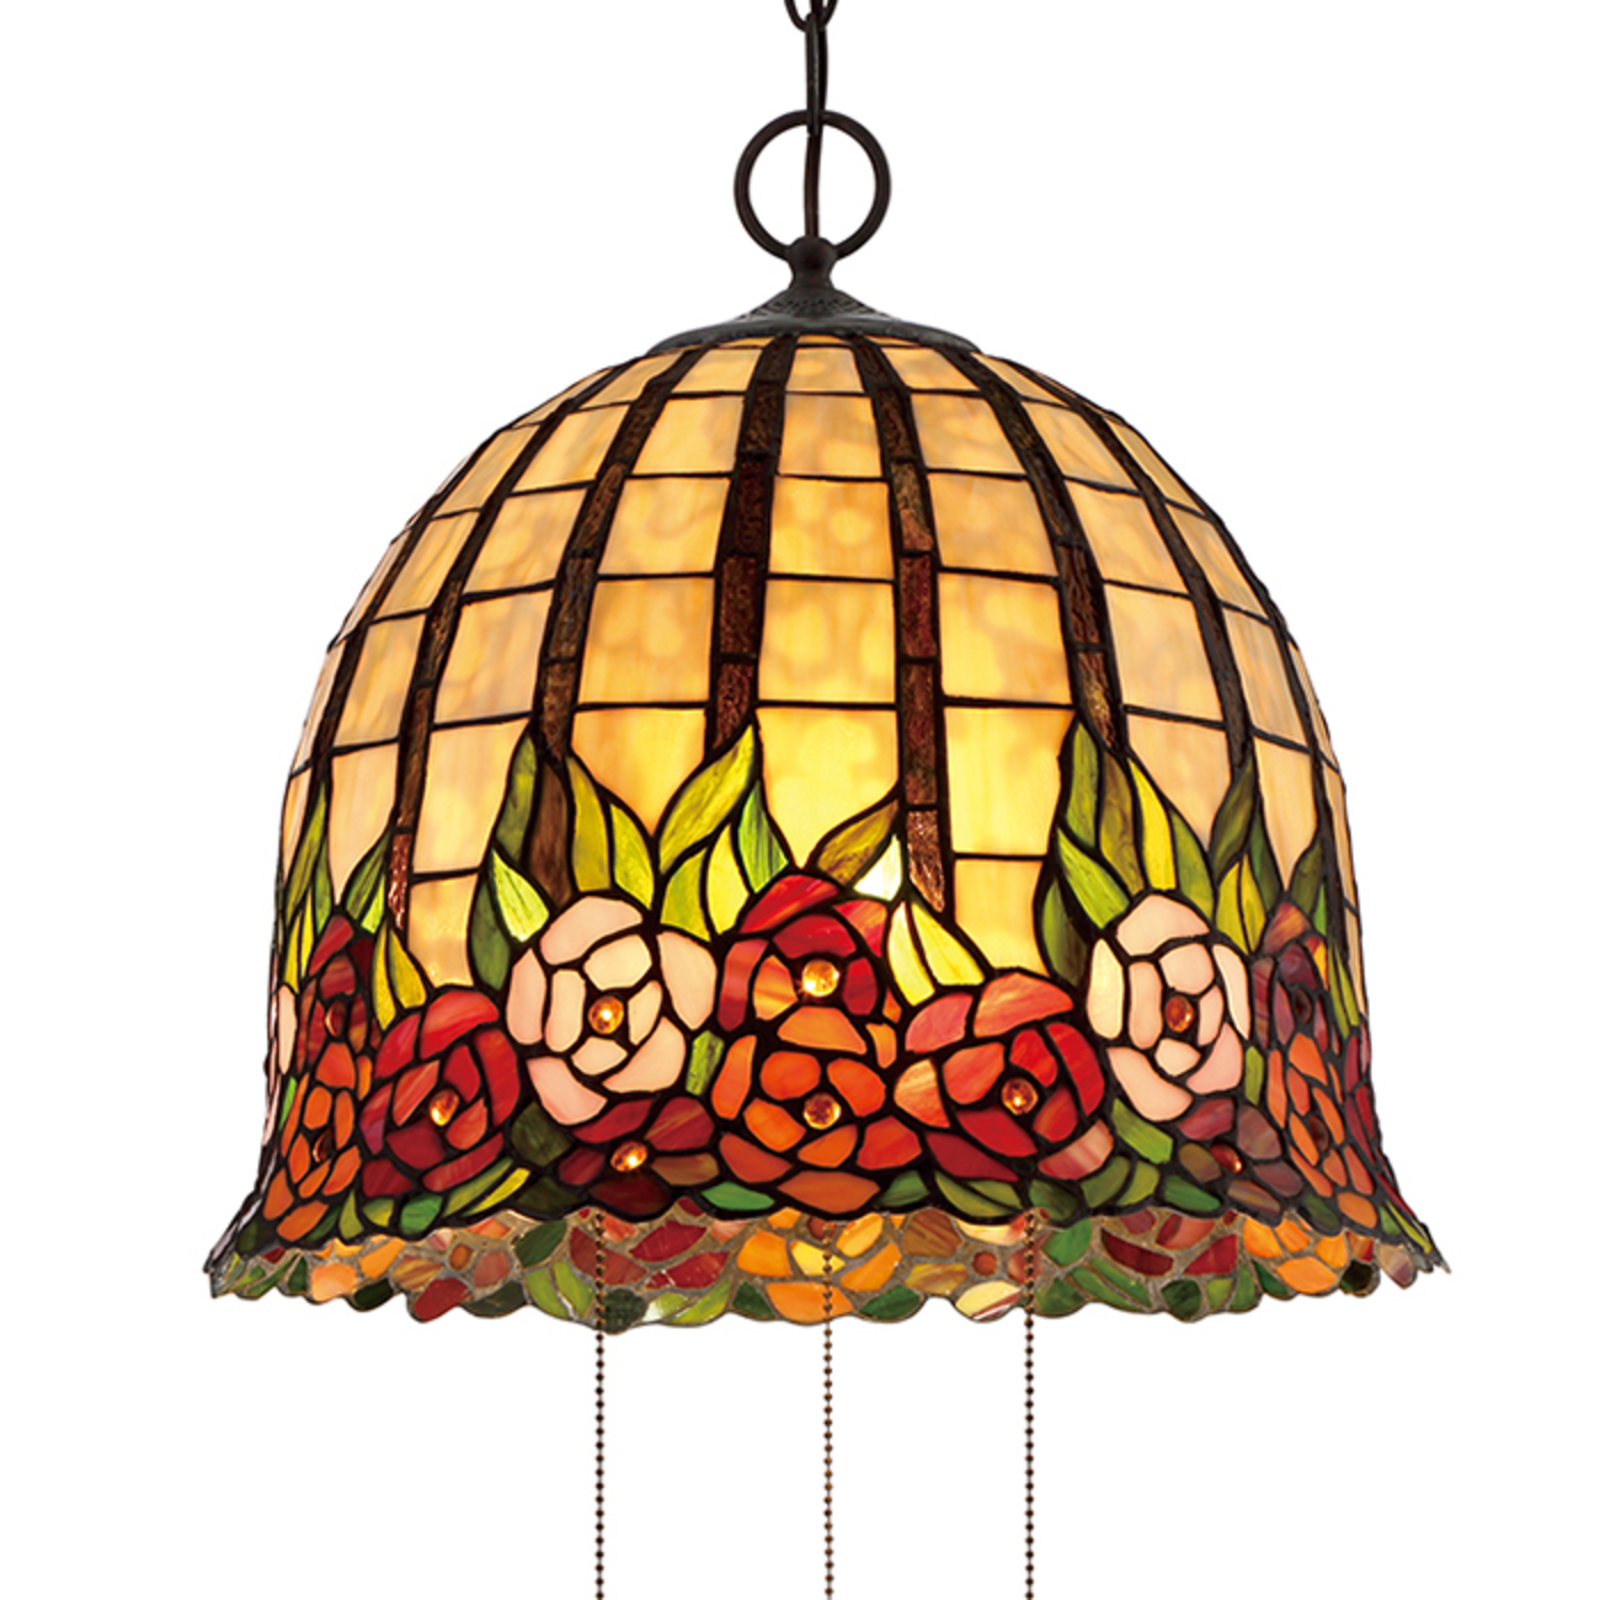 Floral designed Rosecliffe Tiffany pendant light